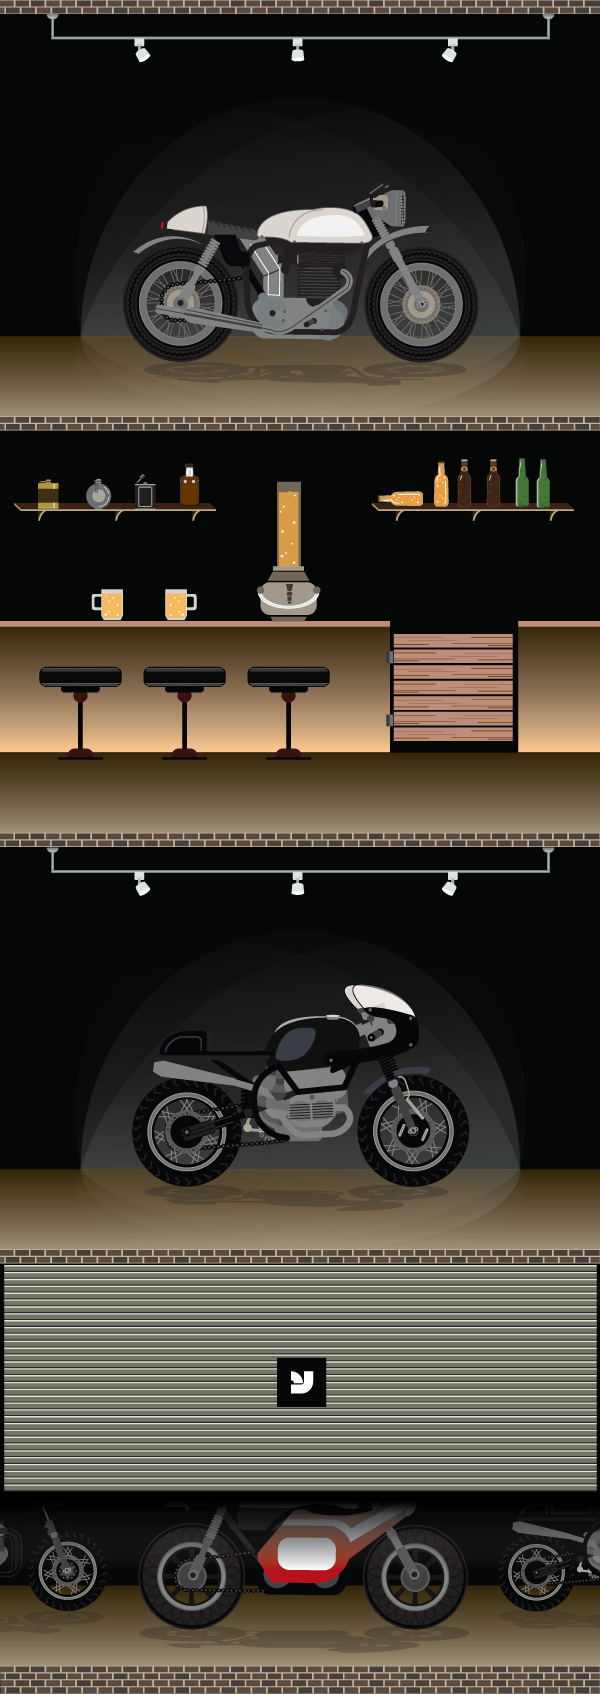 cafe racer motorbike motorcycle triump Ducati harley devidson Triton norton man stuff illustrations vector ride